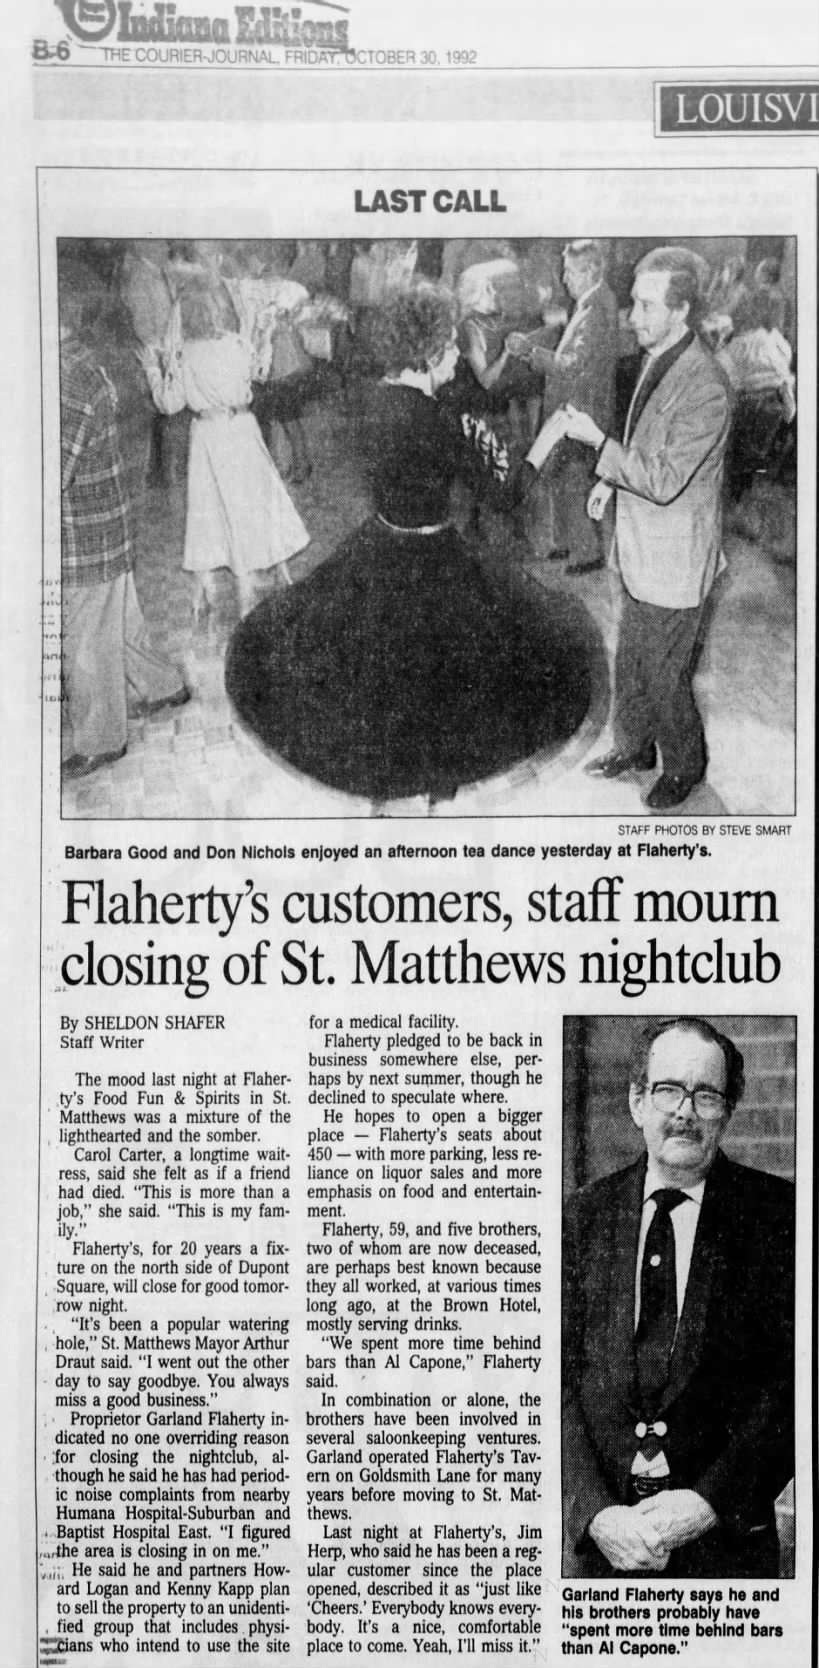 Closing of St. Matthews nightclub